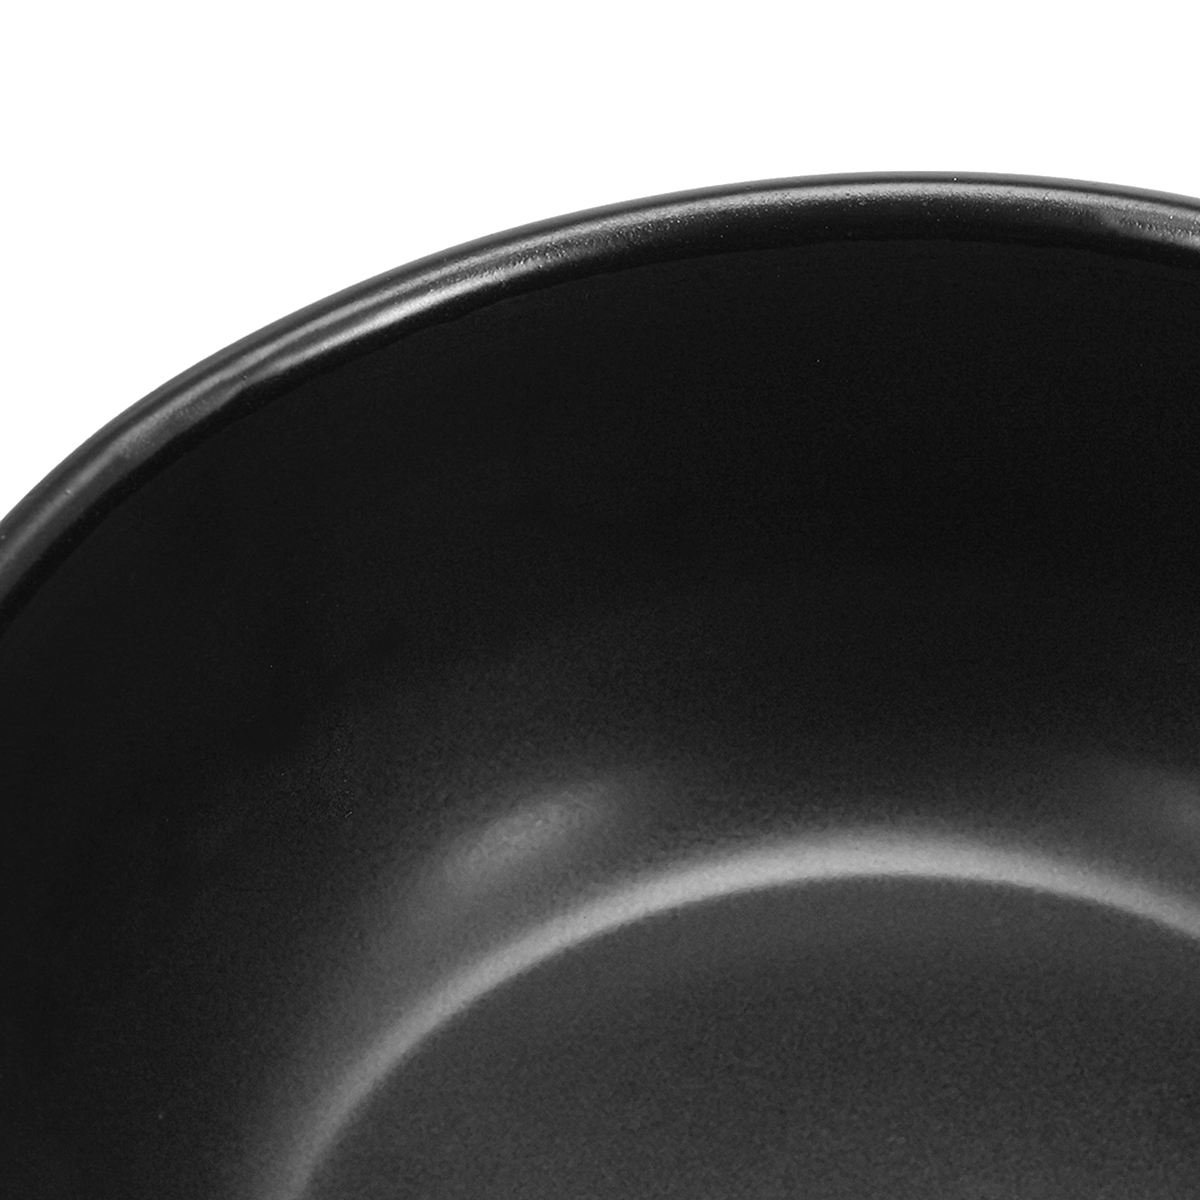 Korean-DOLSOT-Bowl-Big-Sized-Earthenware-Stone-Pot-Bibimbap-Cooking--Trivet-Set-Rice-Bowl-1312437